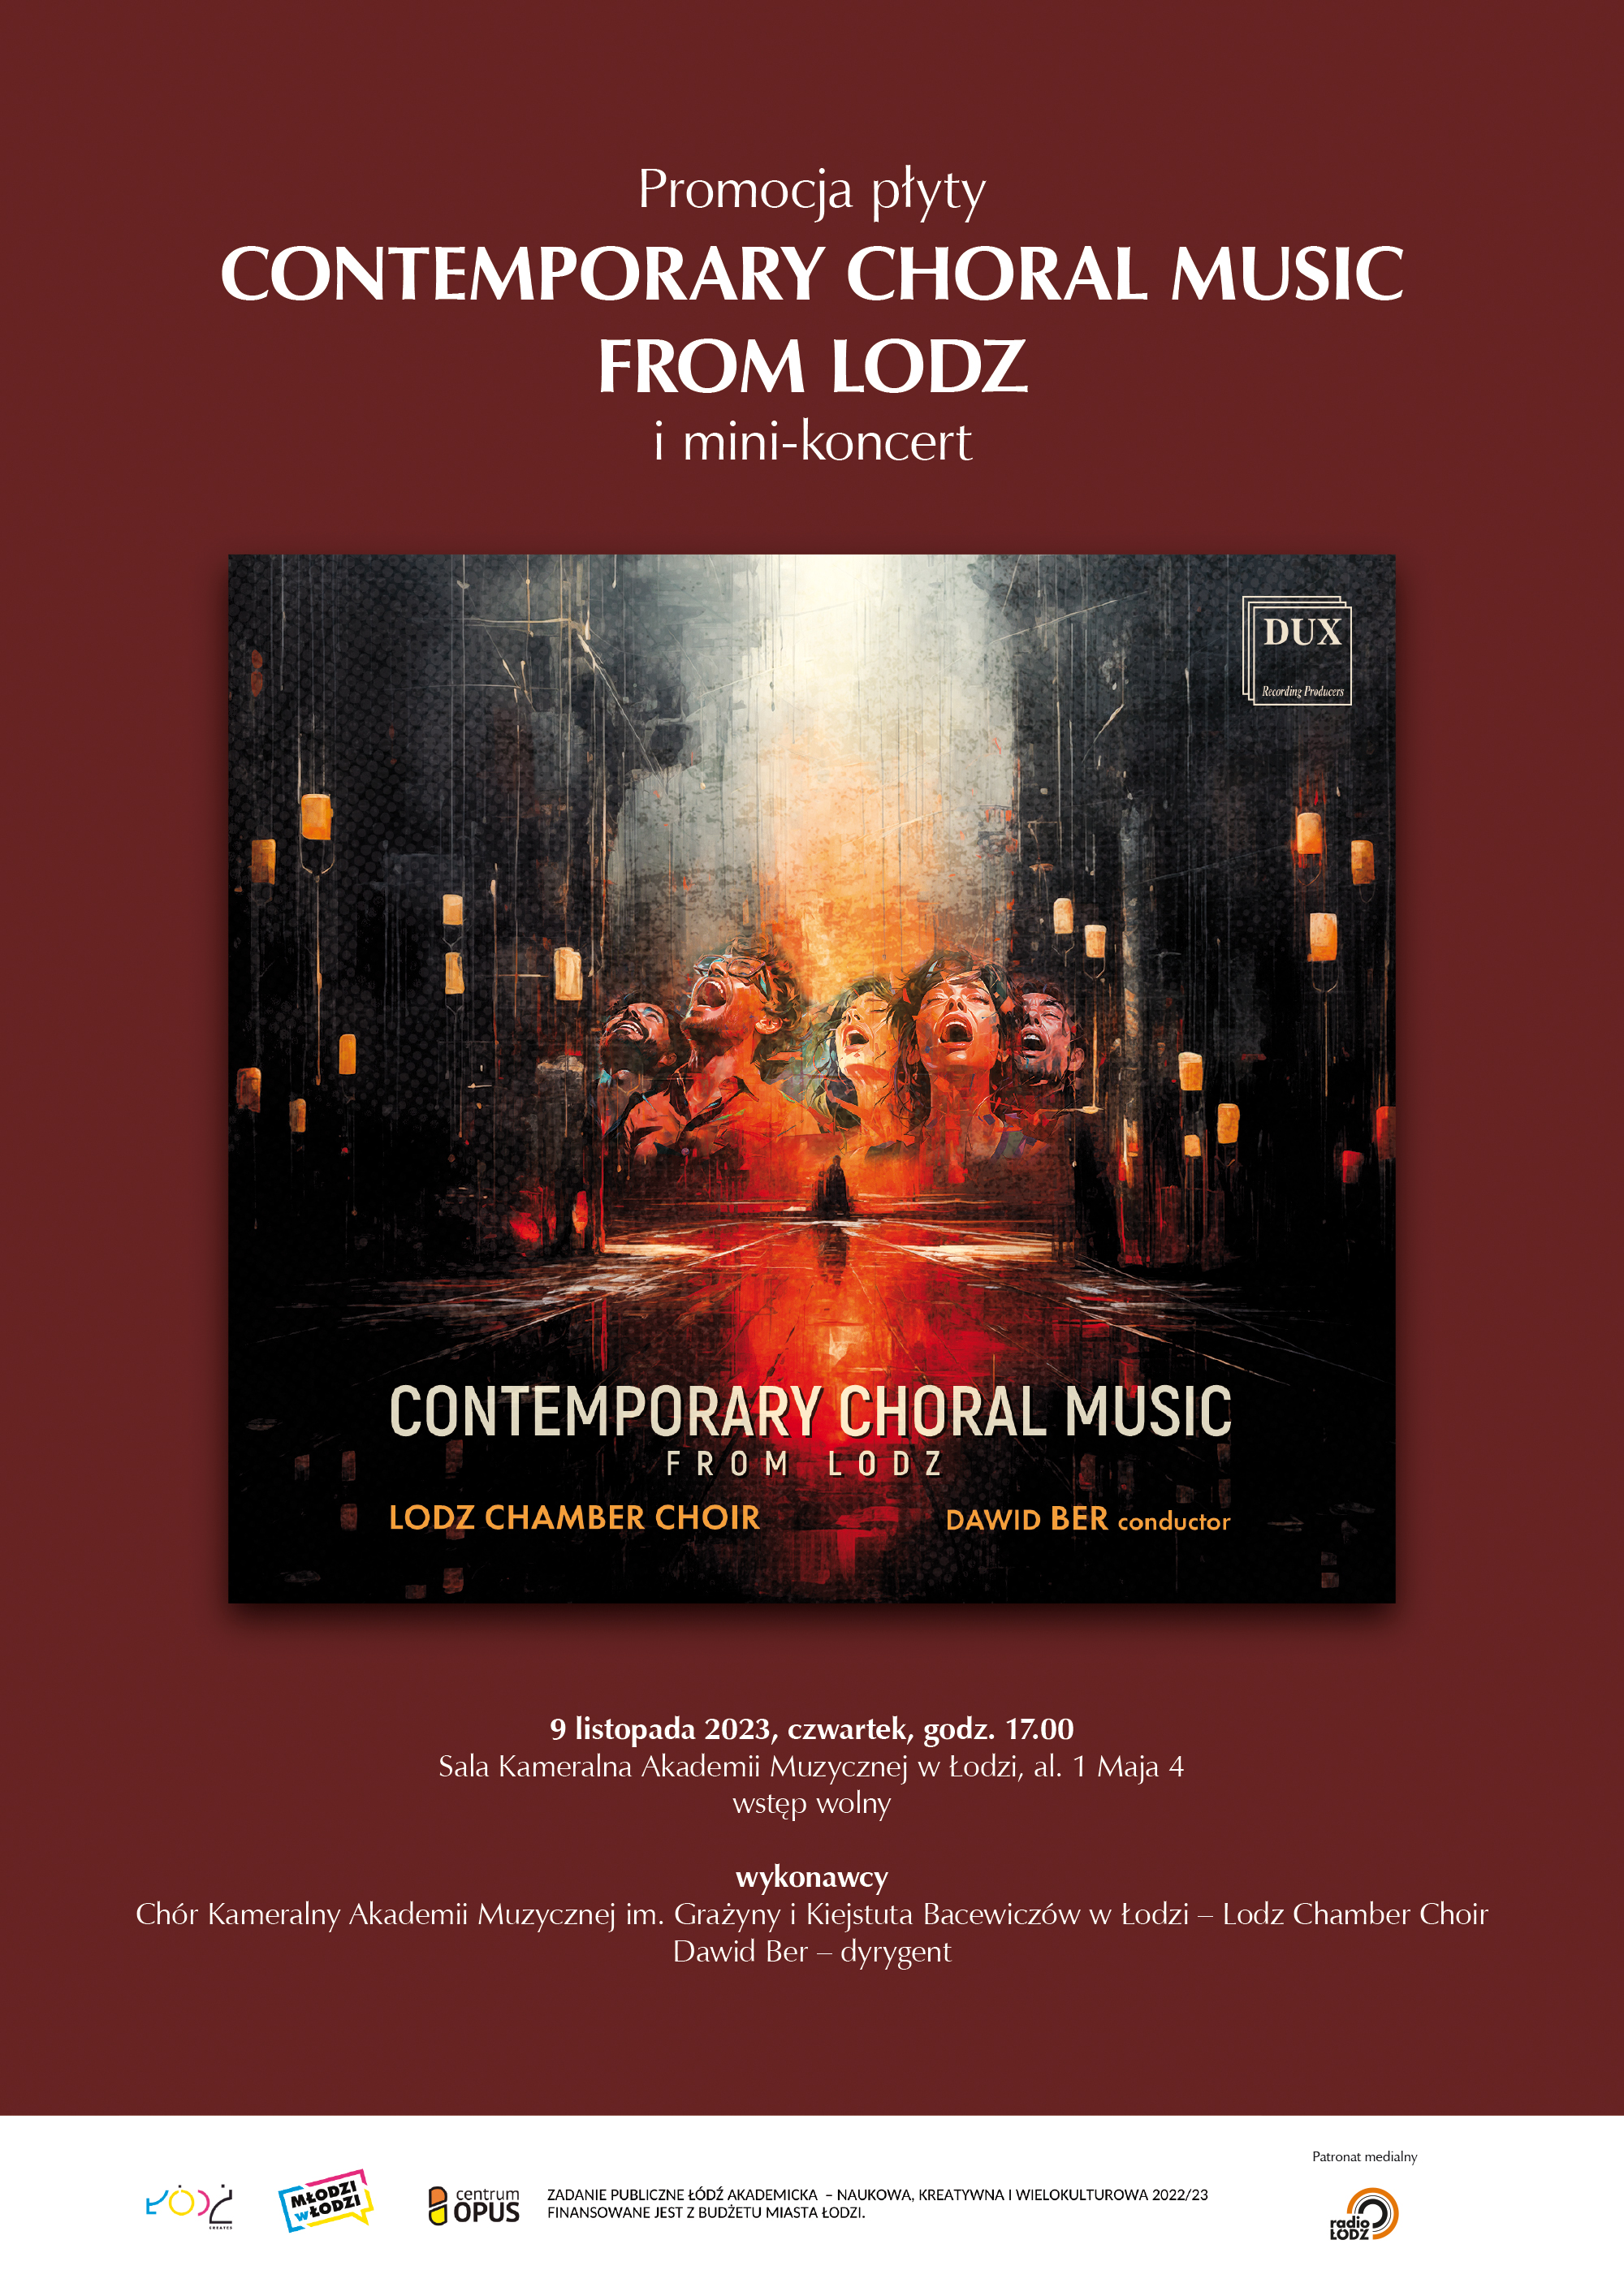 Promocja płyty CONTEMPORARY CHORAL MUSIC FROM LODZ i mini-koncert 